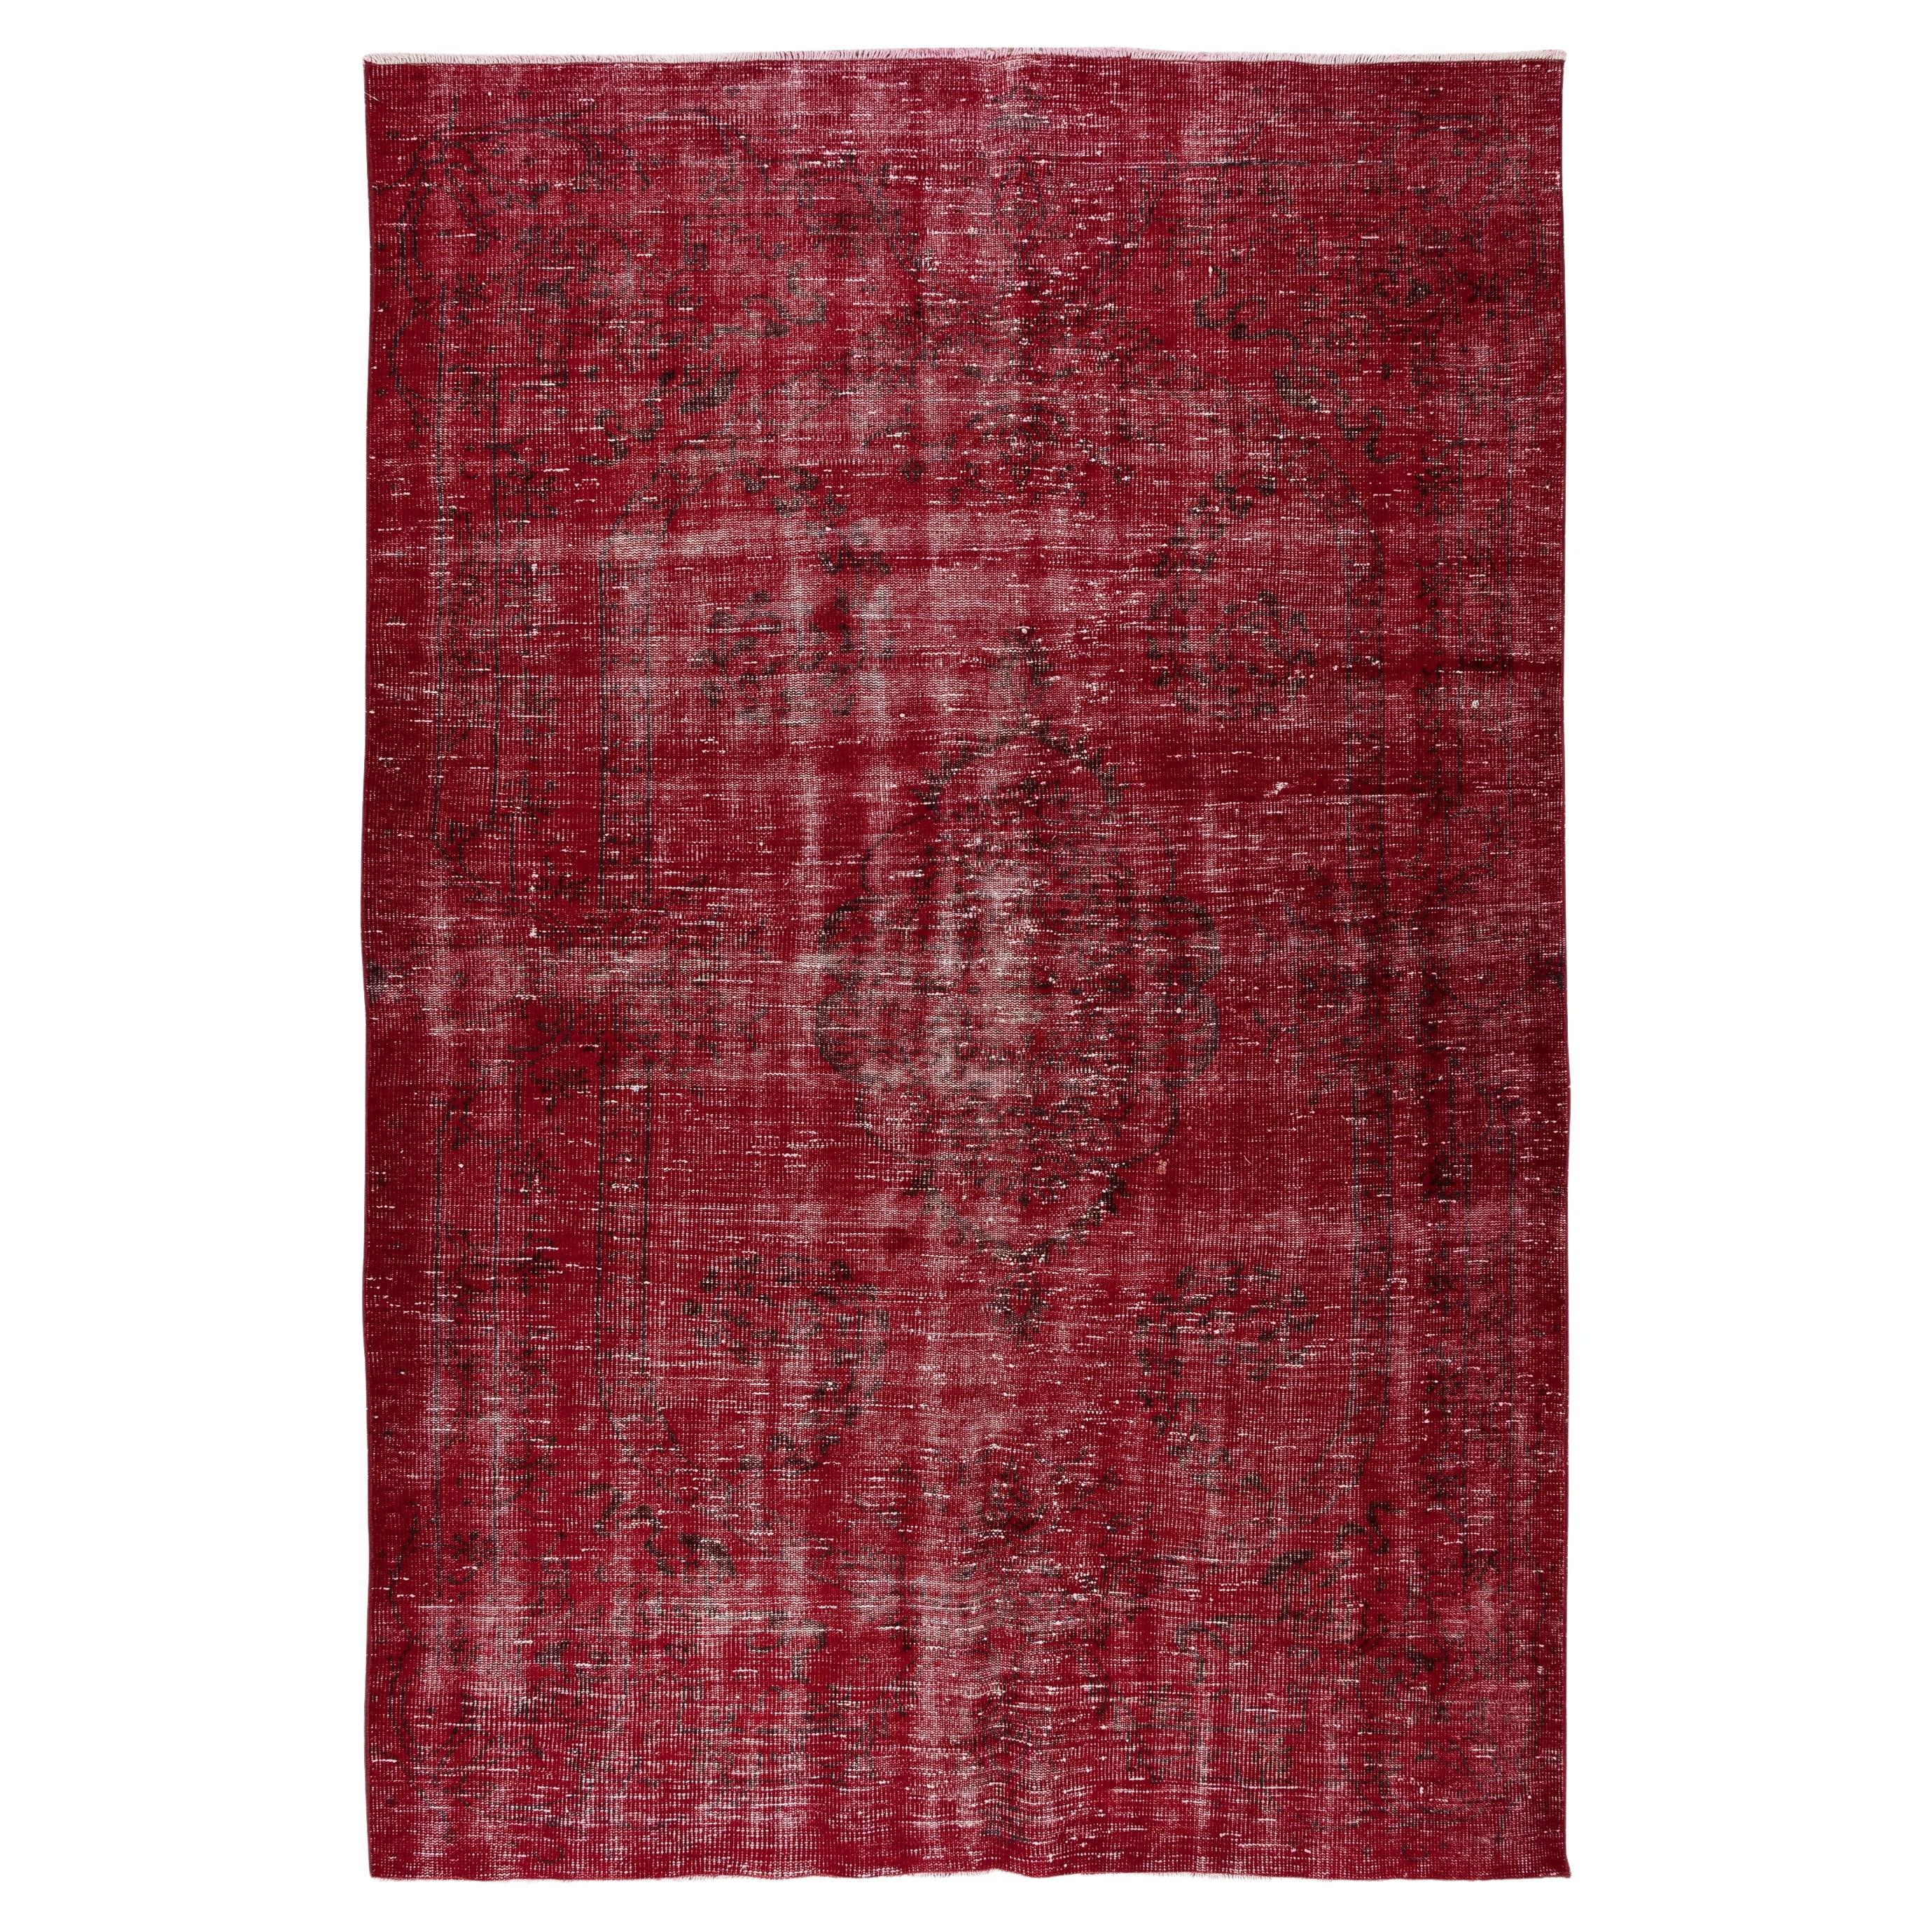 Turkish Handmade Burgundy Red Rug, Traditional & Modern Wool Carpet